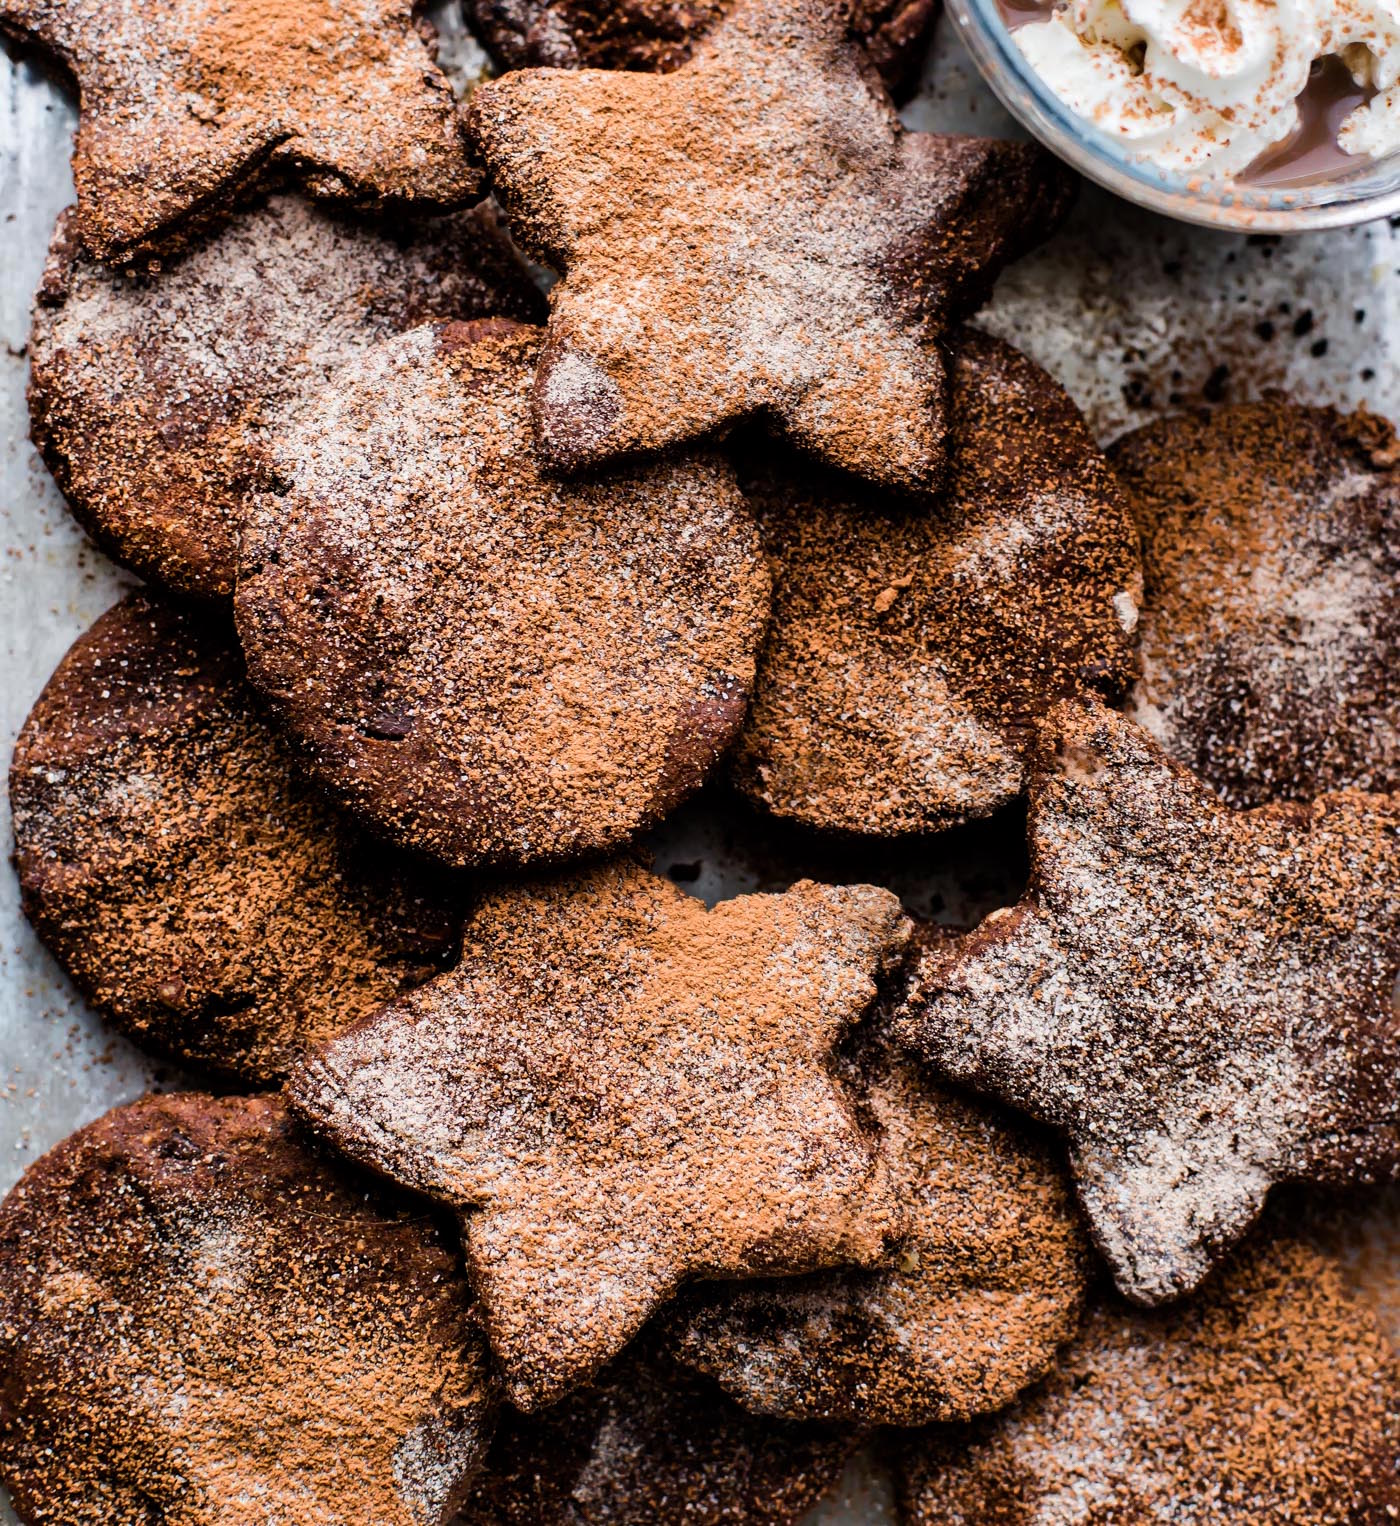 https://plantifulemma.com/wp-content/uploads/2019/12/Mexican-Hot-Chocolate-Sugar-Cookies-Paleo-Vegan-friendly-7.jpg